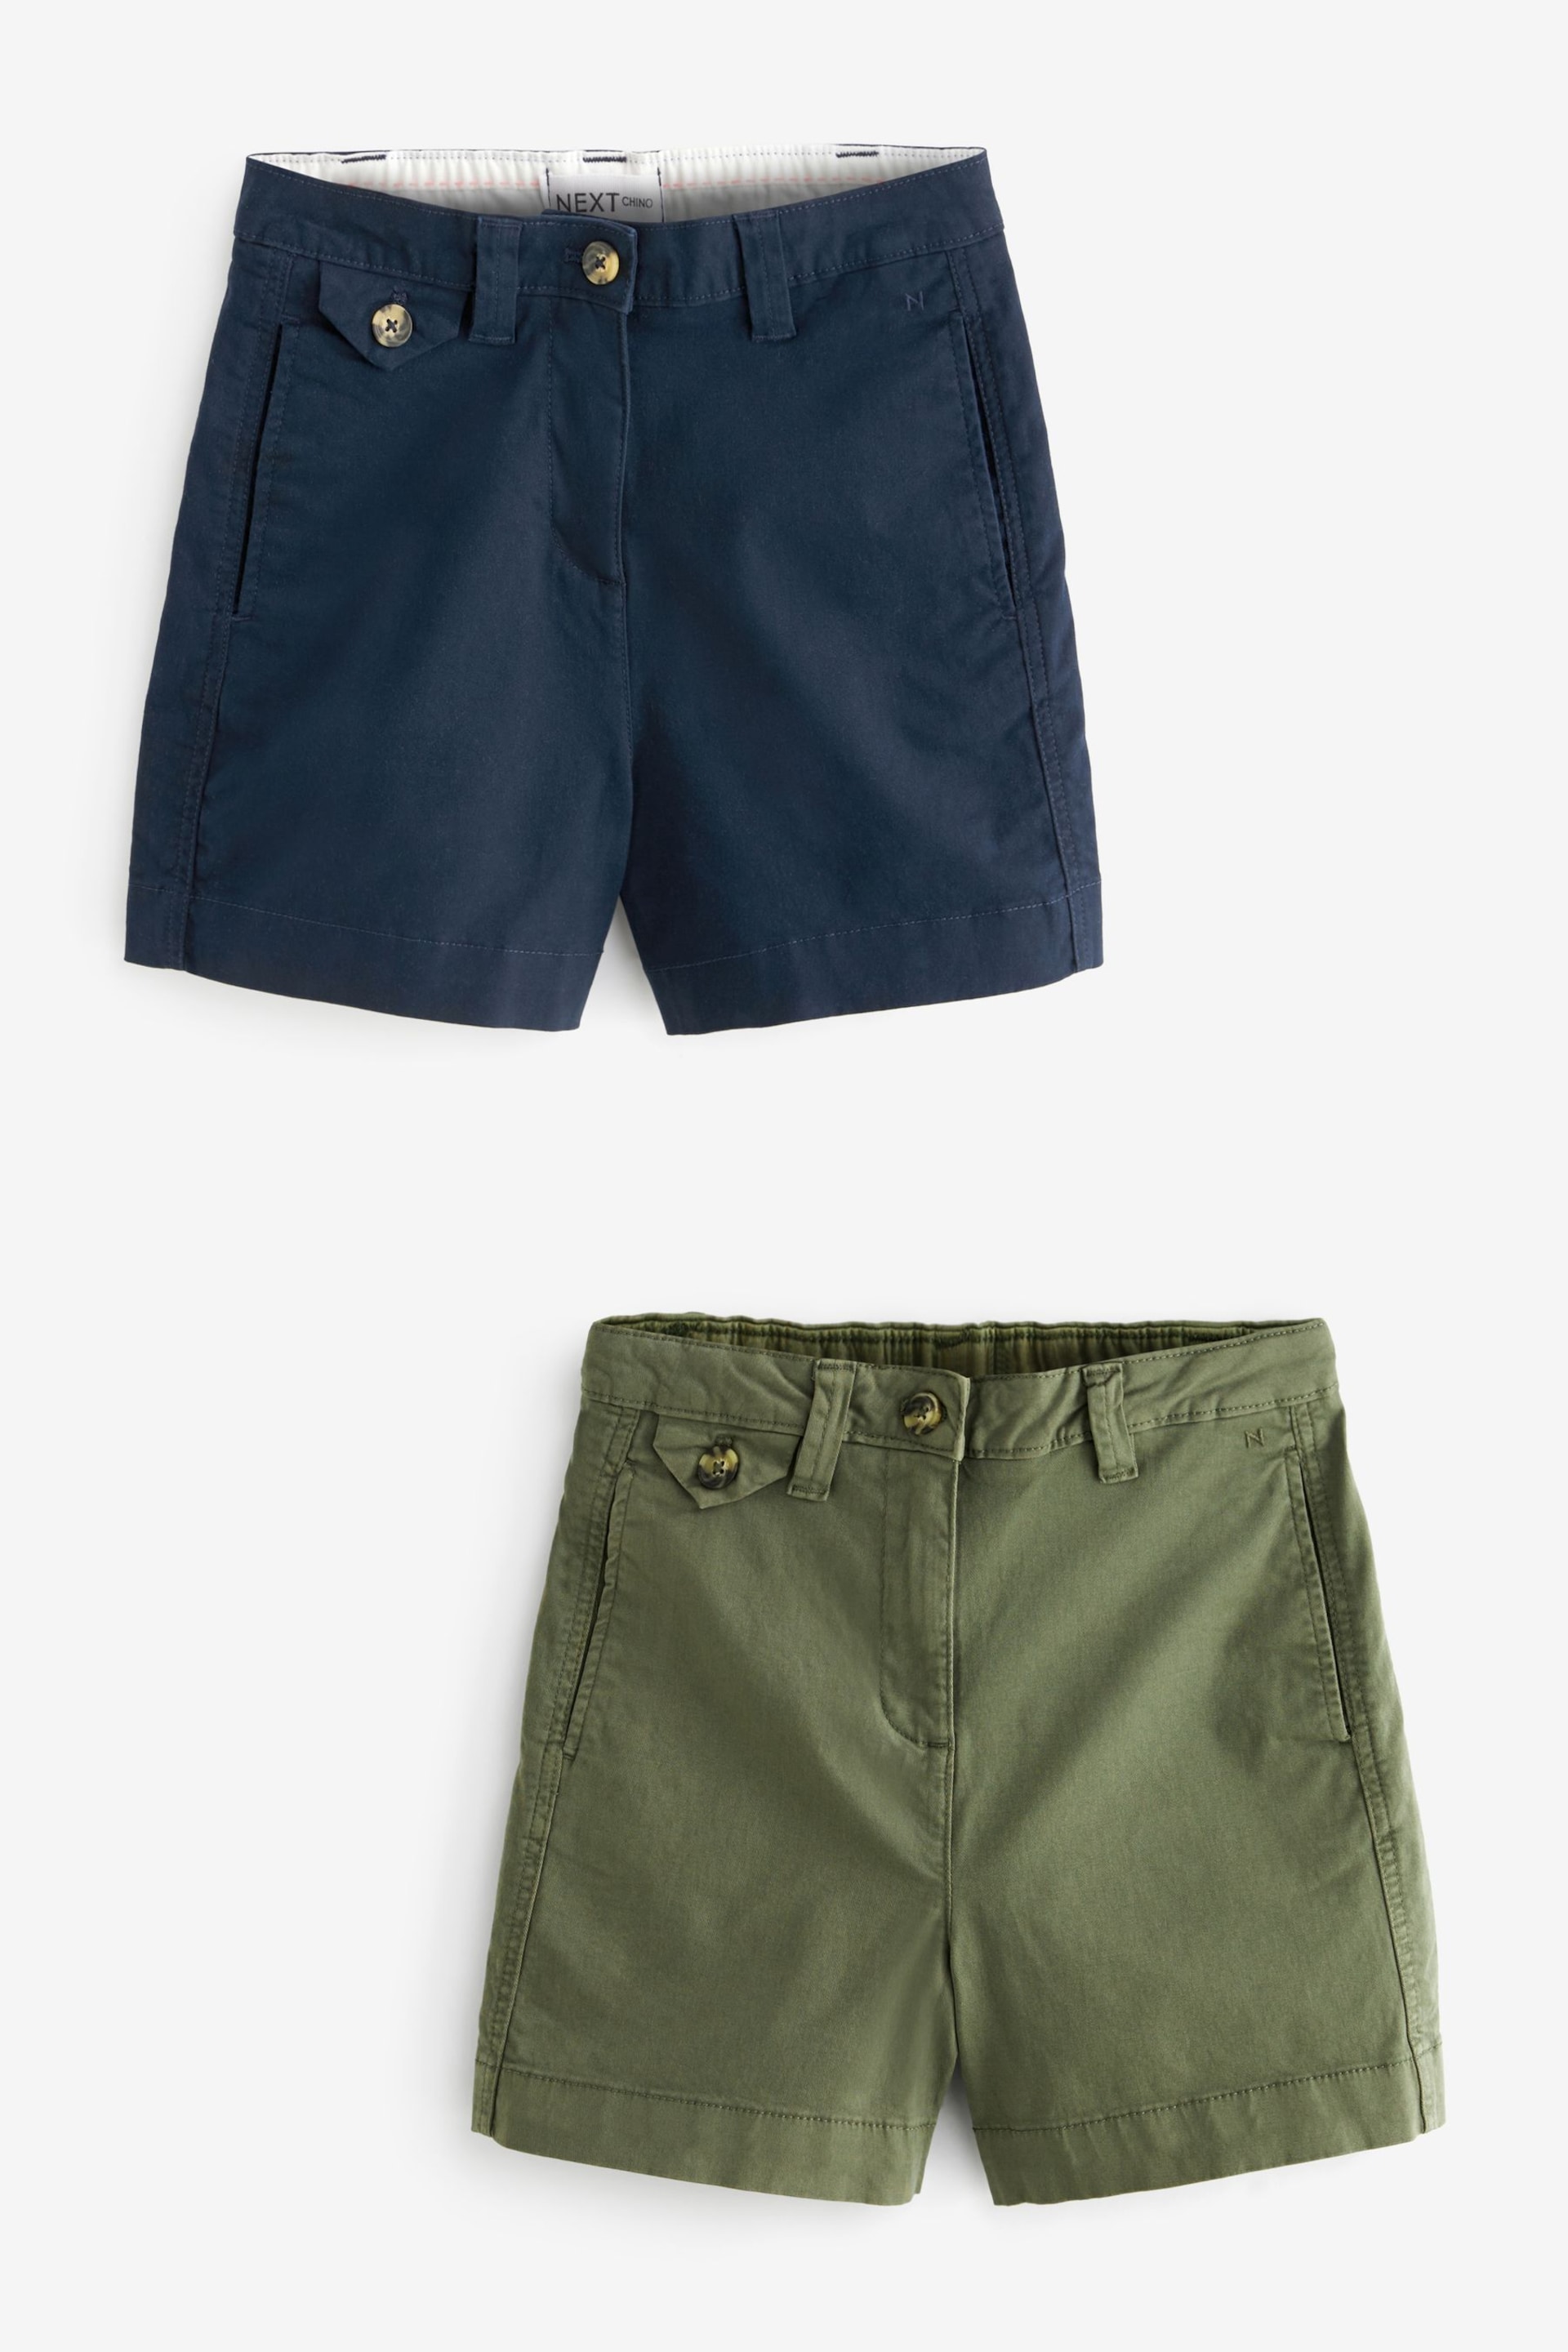 Navy & Khaki Chino Boy Shorts 2 Pack - Image 1 of 12